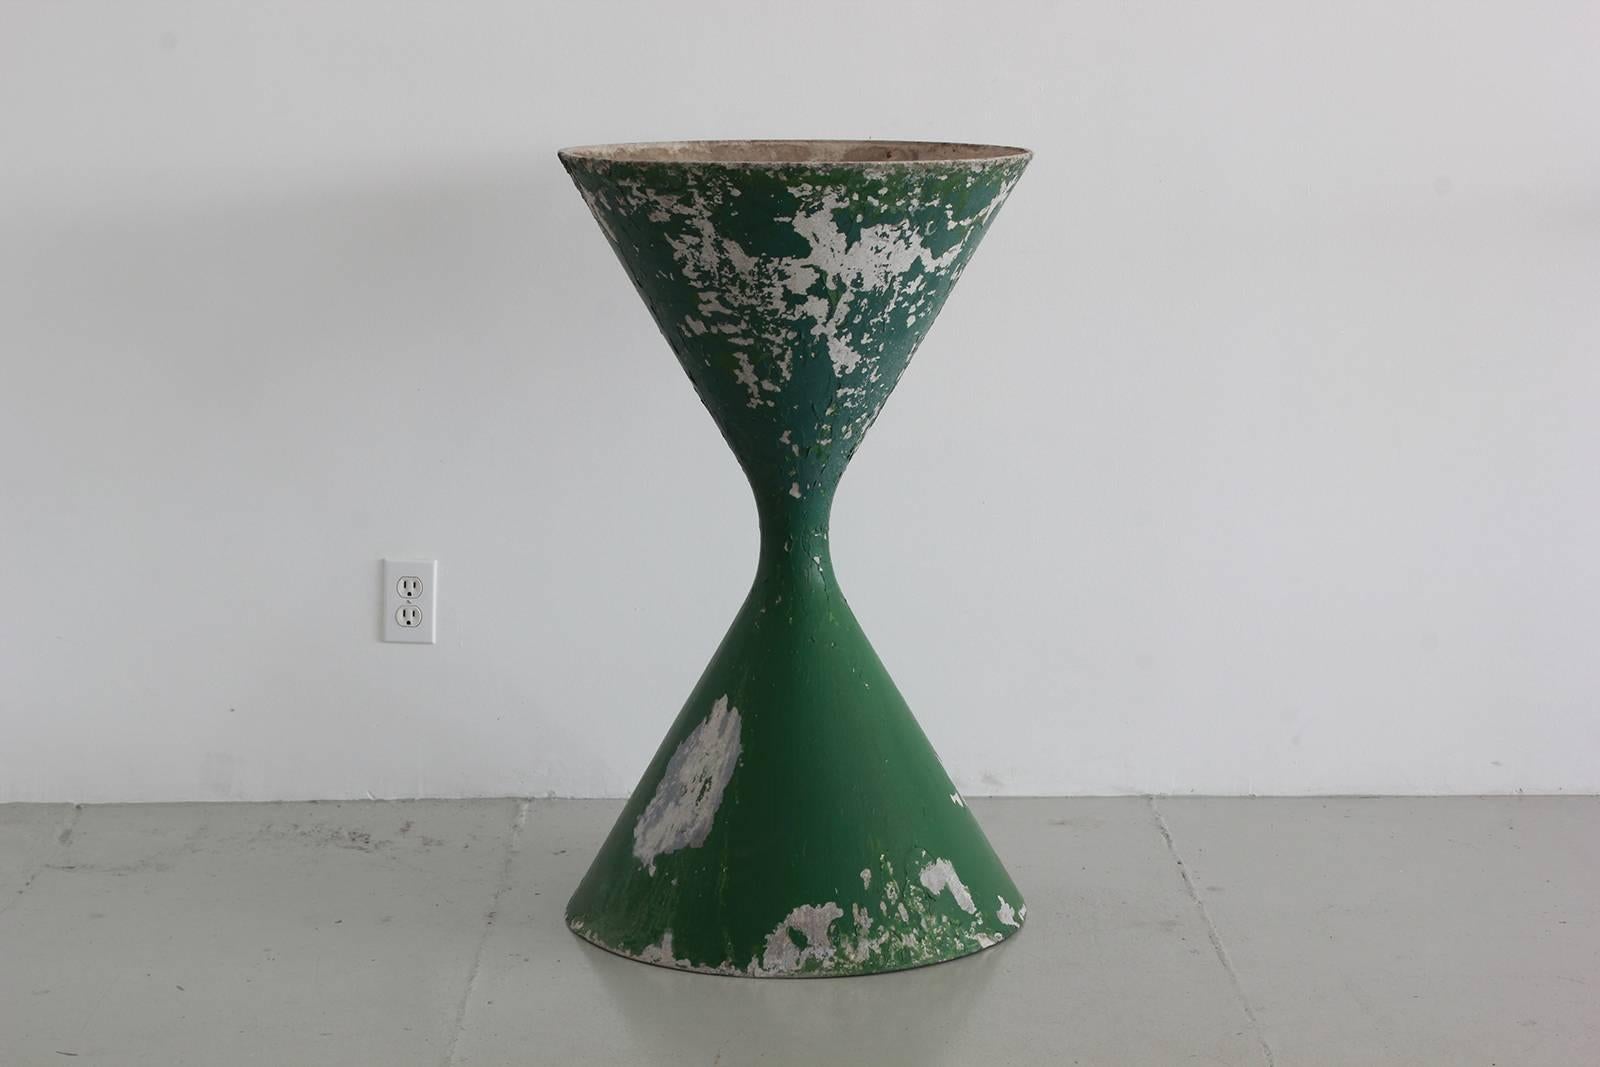 Extraordinary Willy Guhl hourglass shaped pot with original green paint patina.